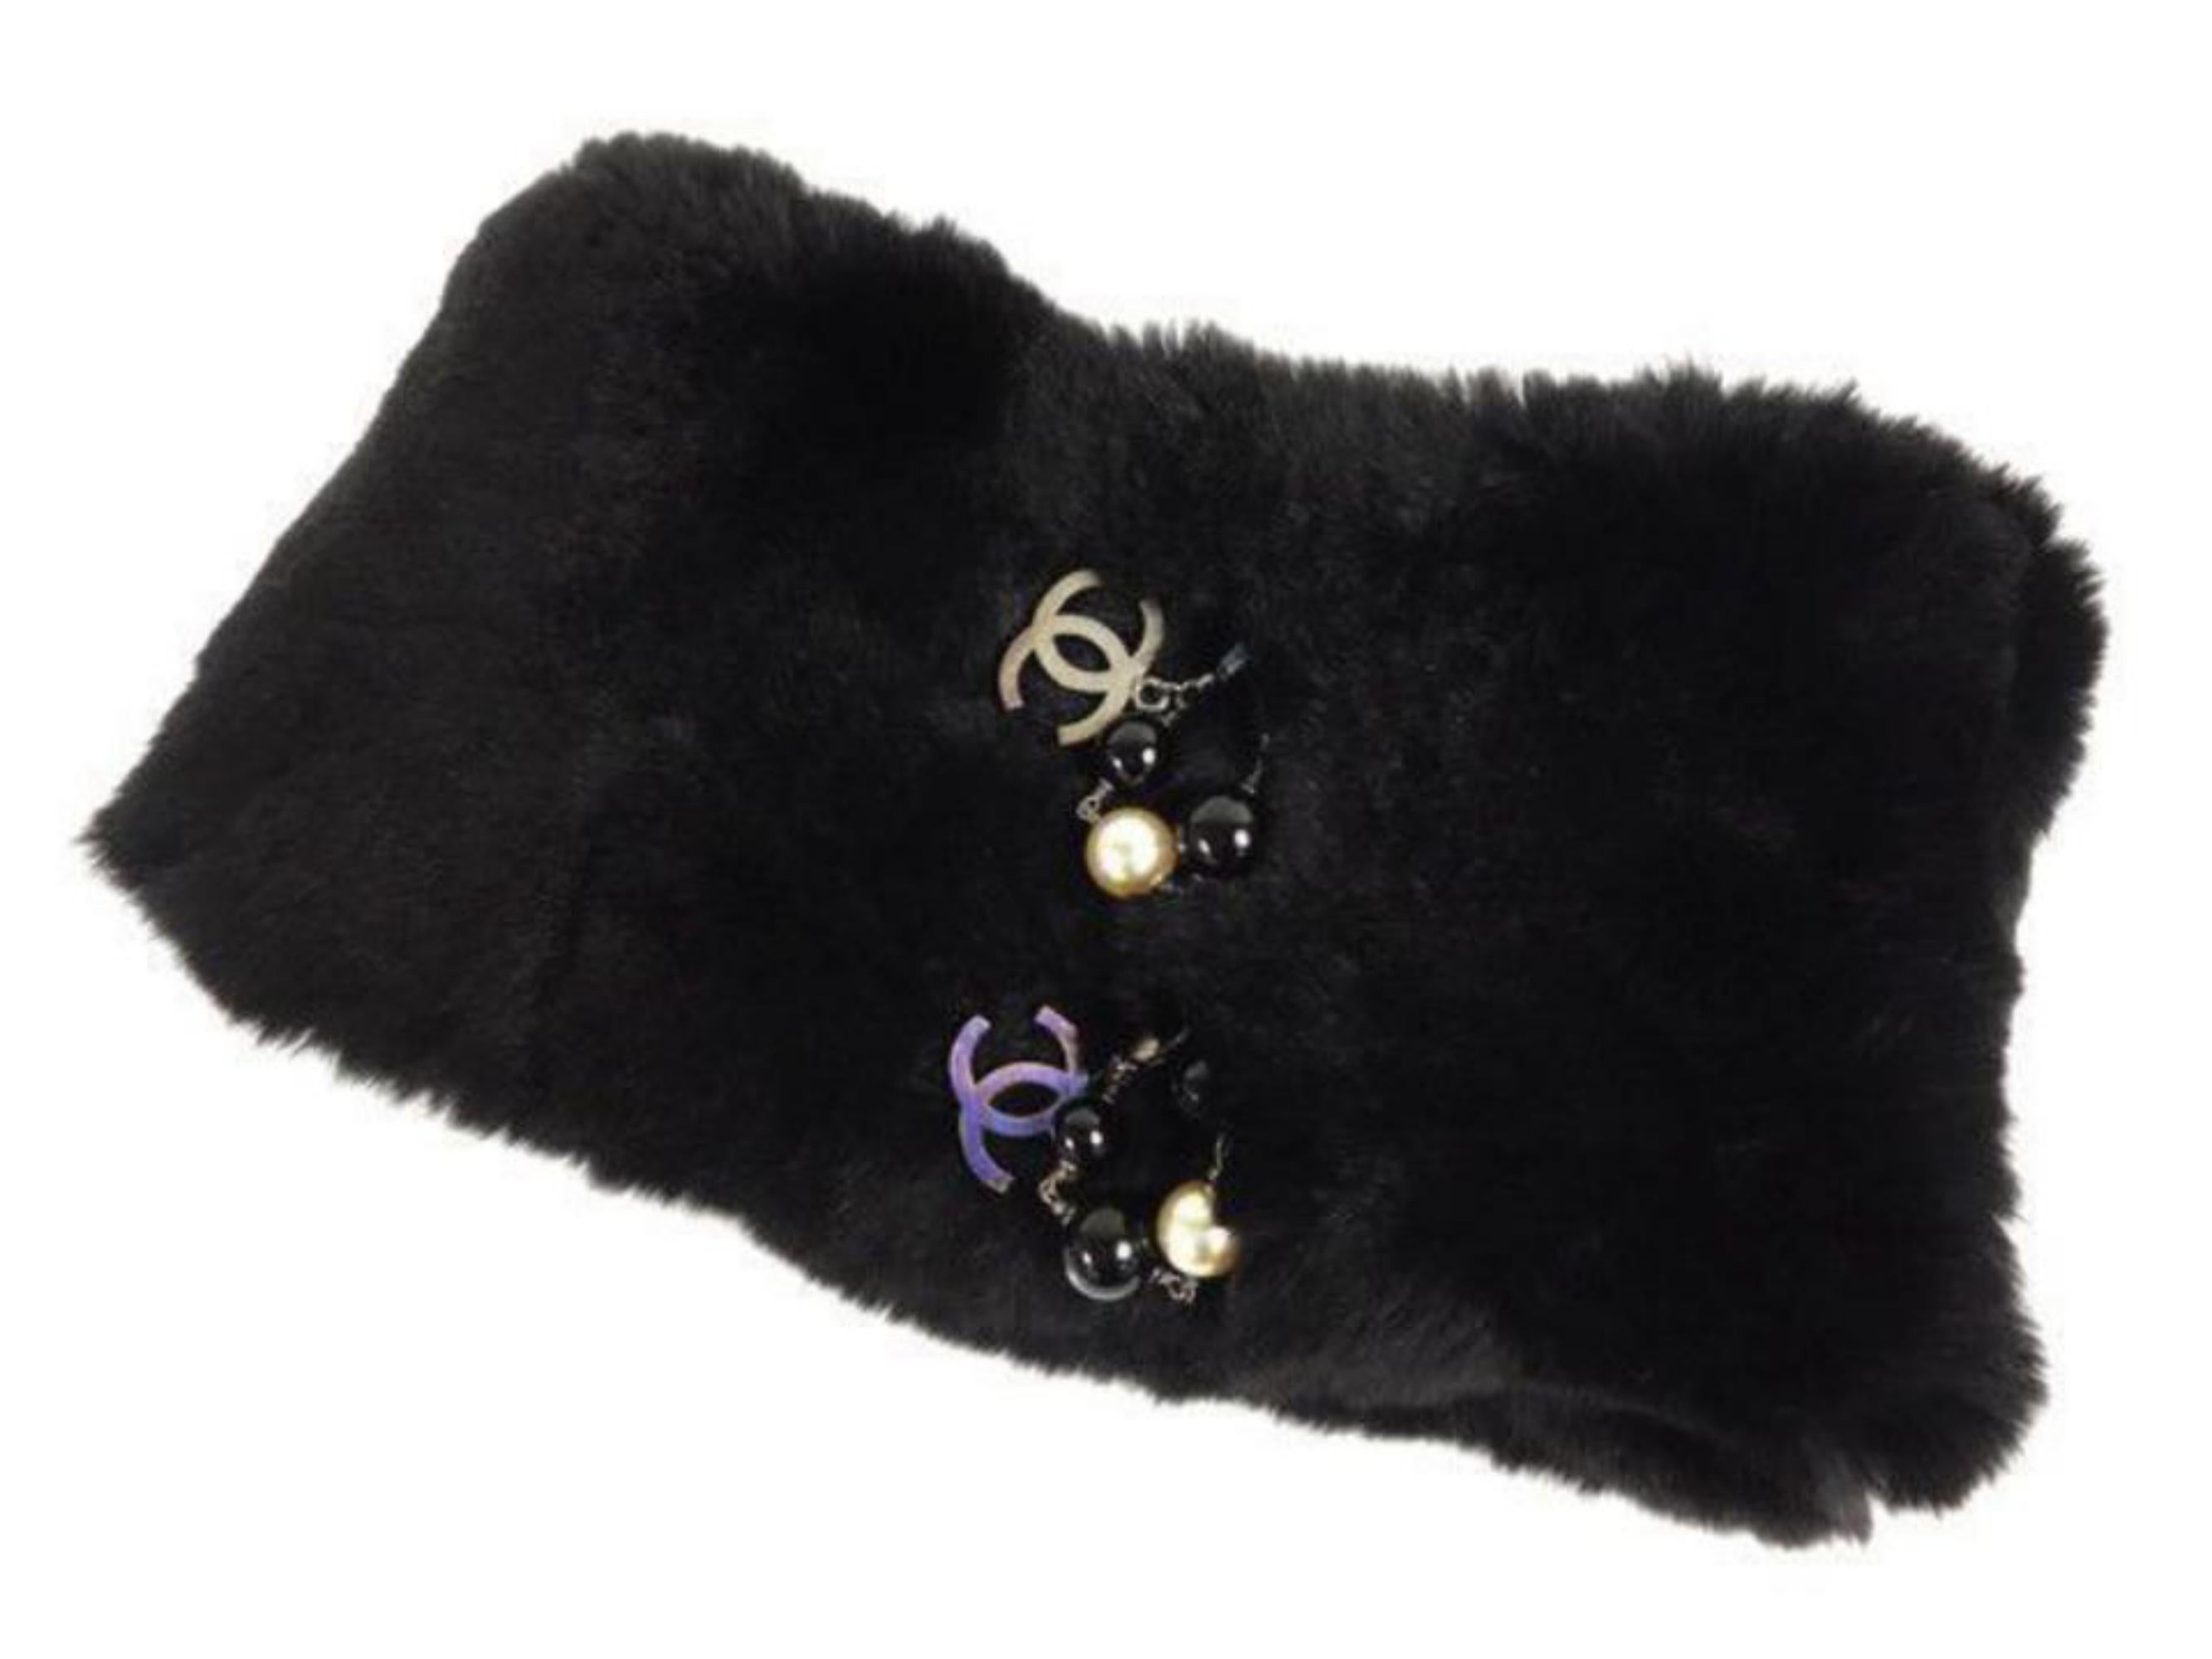 Chanel Black Double Cc Charm Pearl Rabbit Fur Scarf 231526 For Sale 3